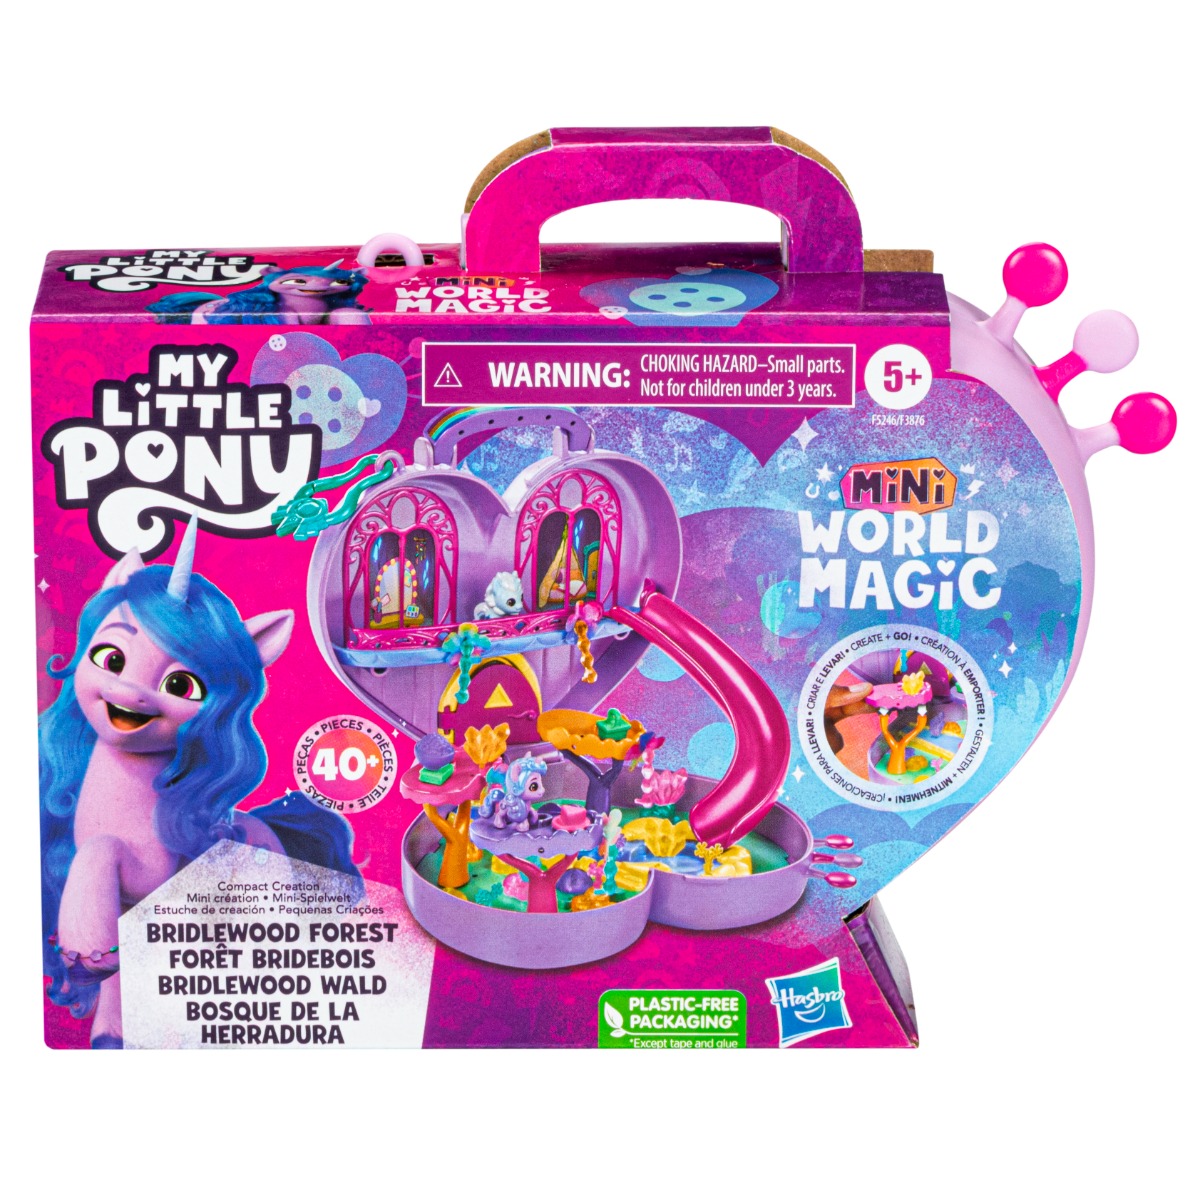 Set de joaca cu figurina, My Little Pony, Mini World Magic, Bridlewood Forest, F5246